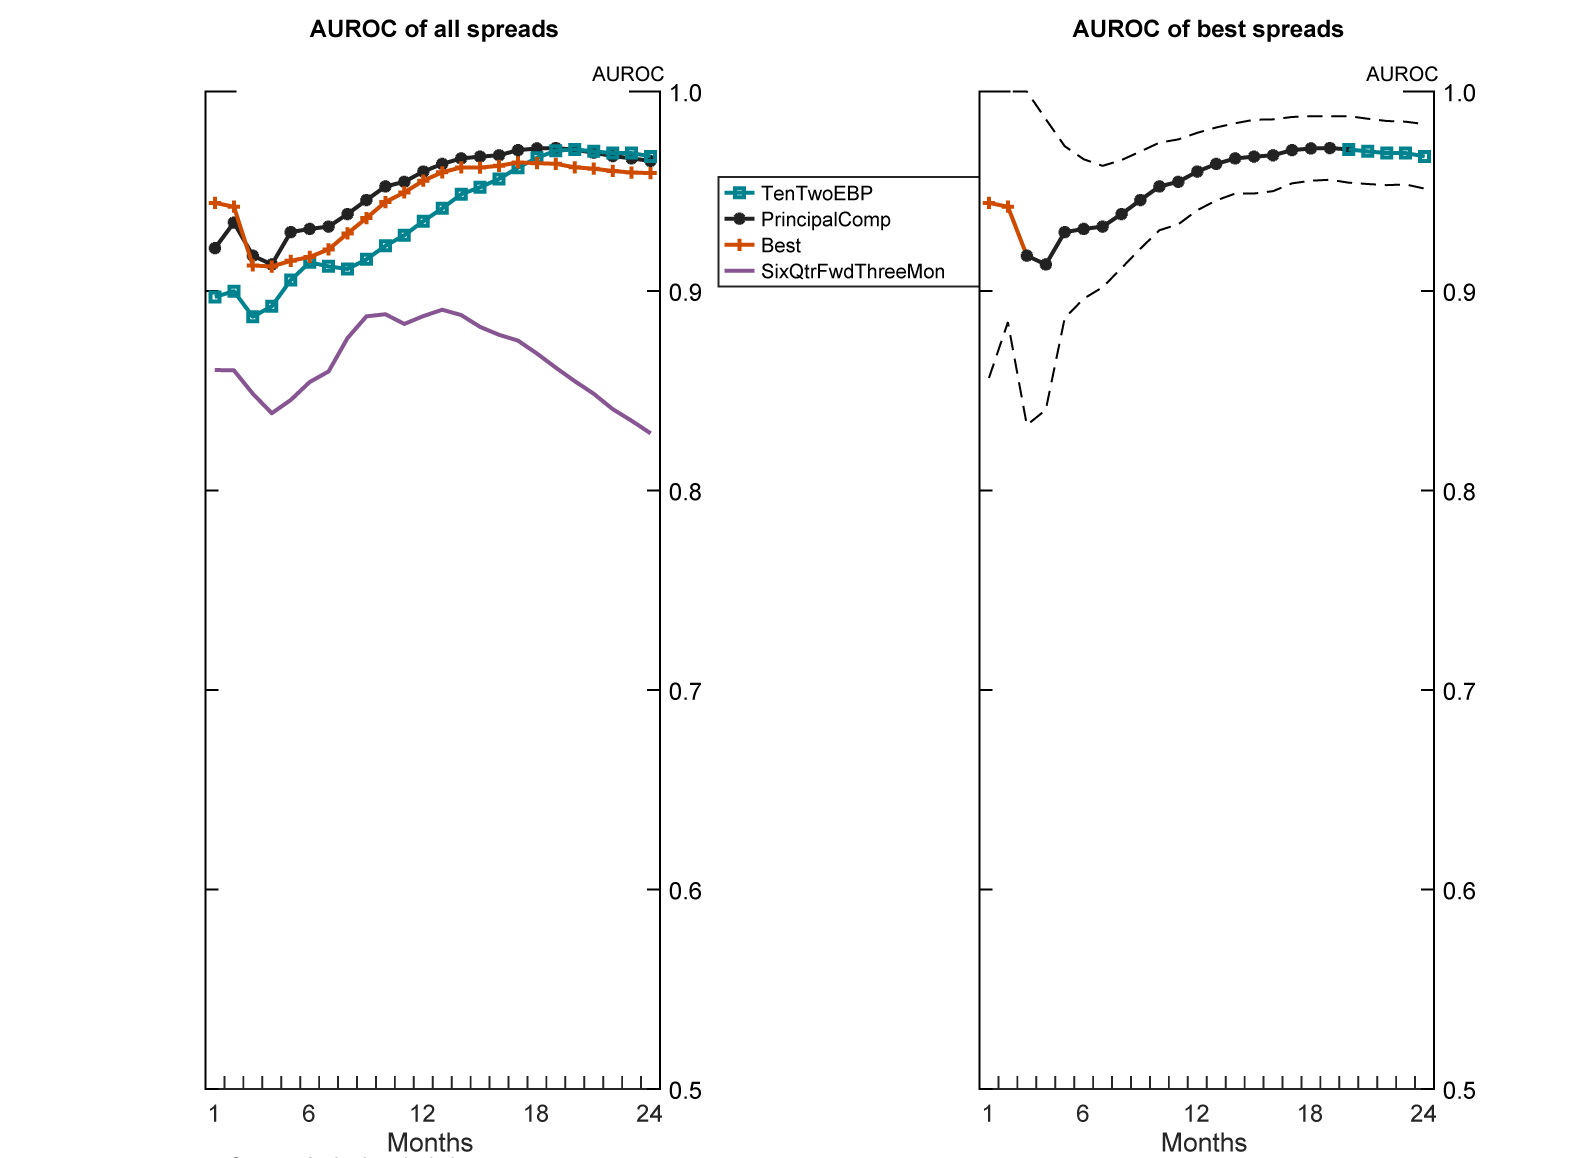 Figure 4. AUROC Sample 1984 - 2018. See accessible link for data description.